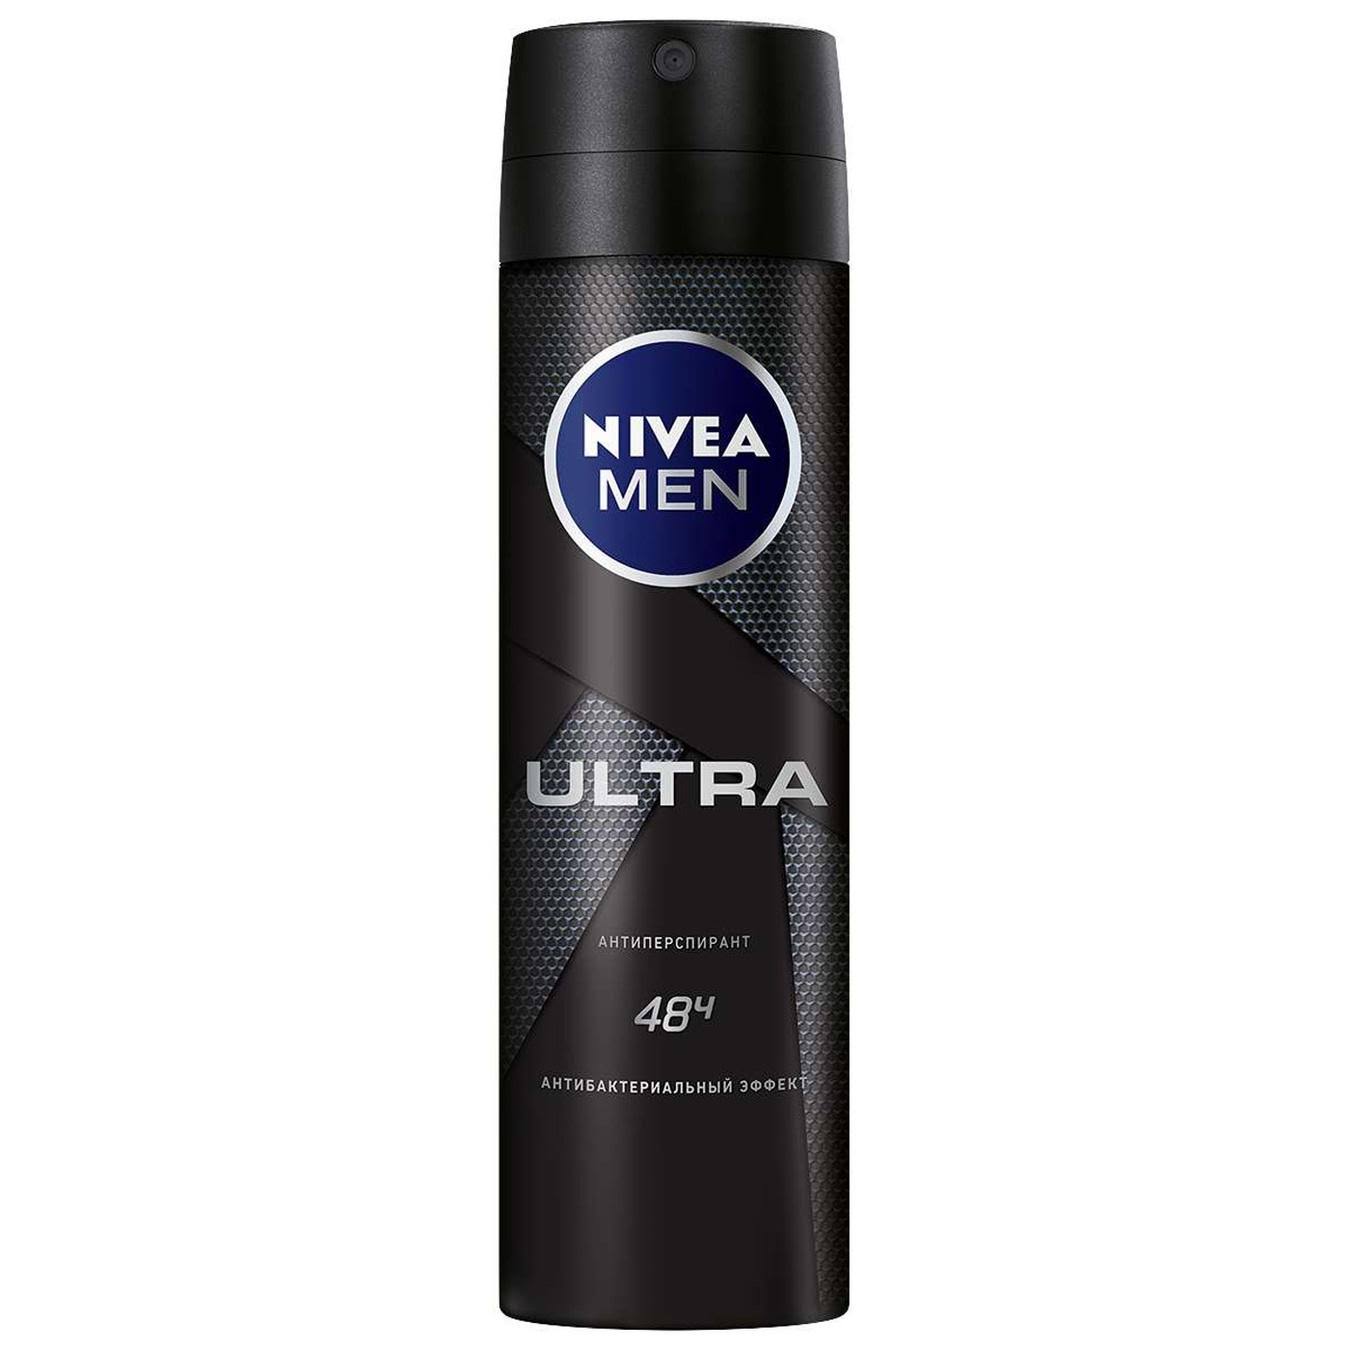 NIVEA Men Deep Anti-perspirant Deodorant Spray - 150ml